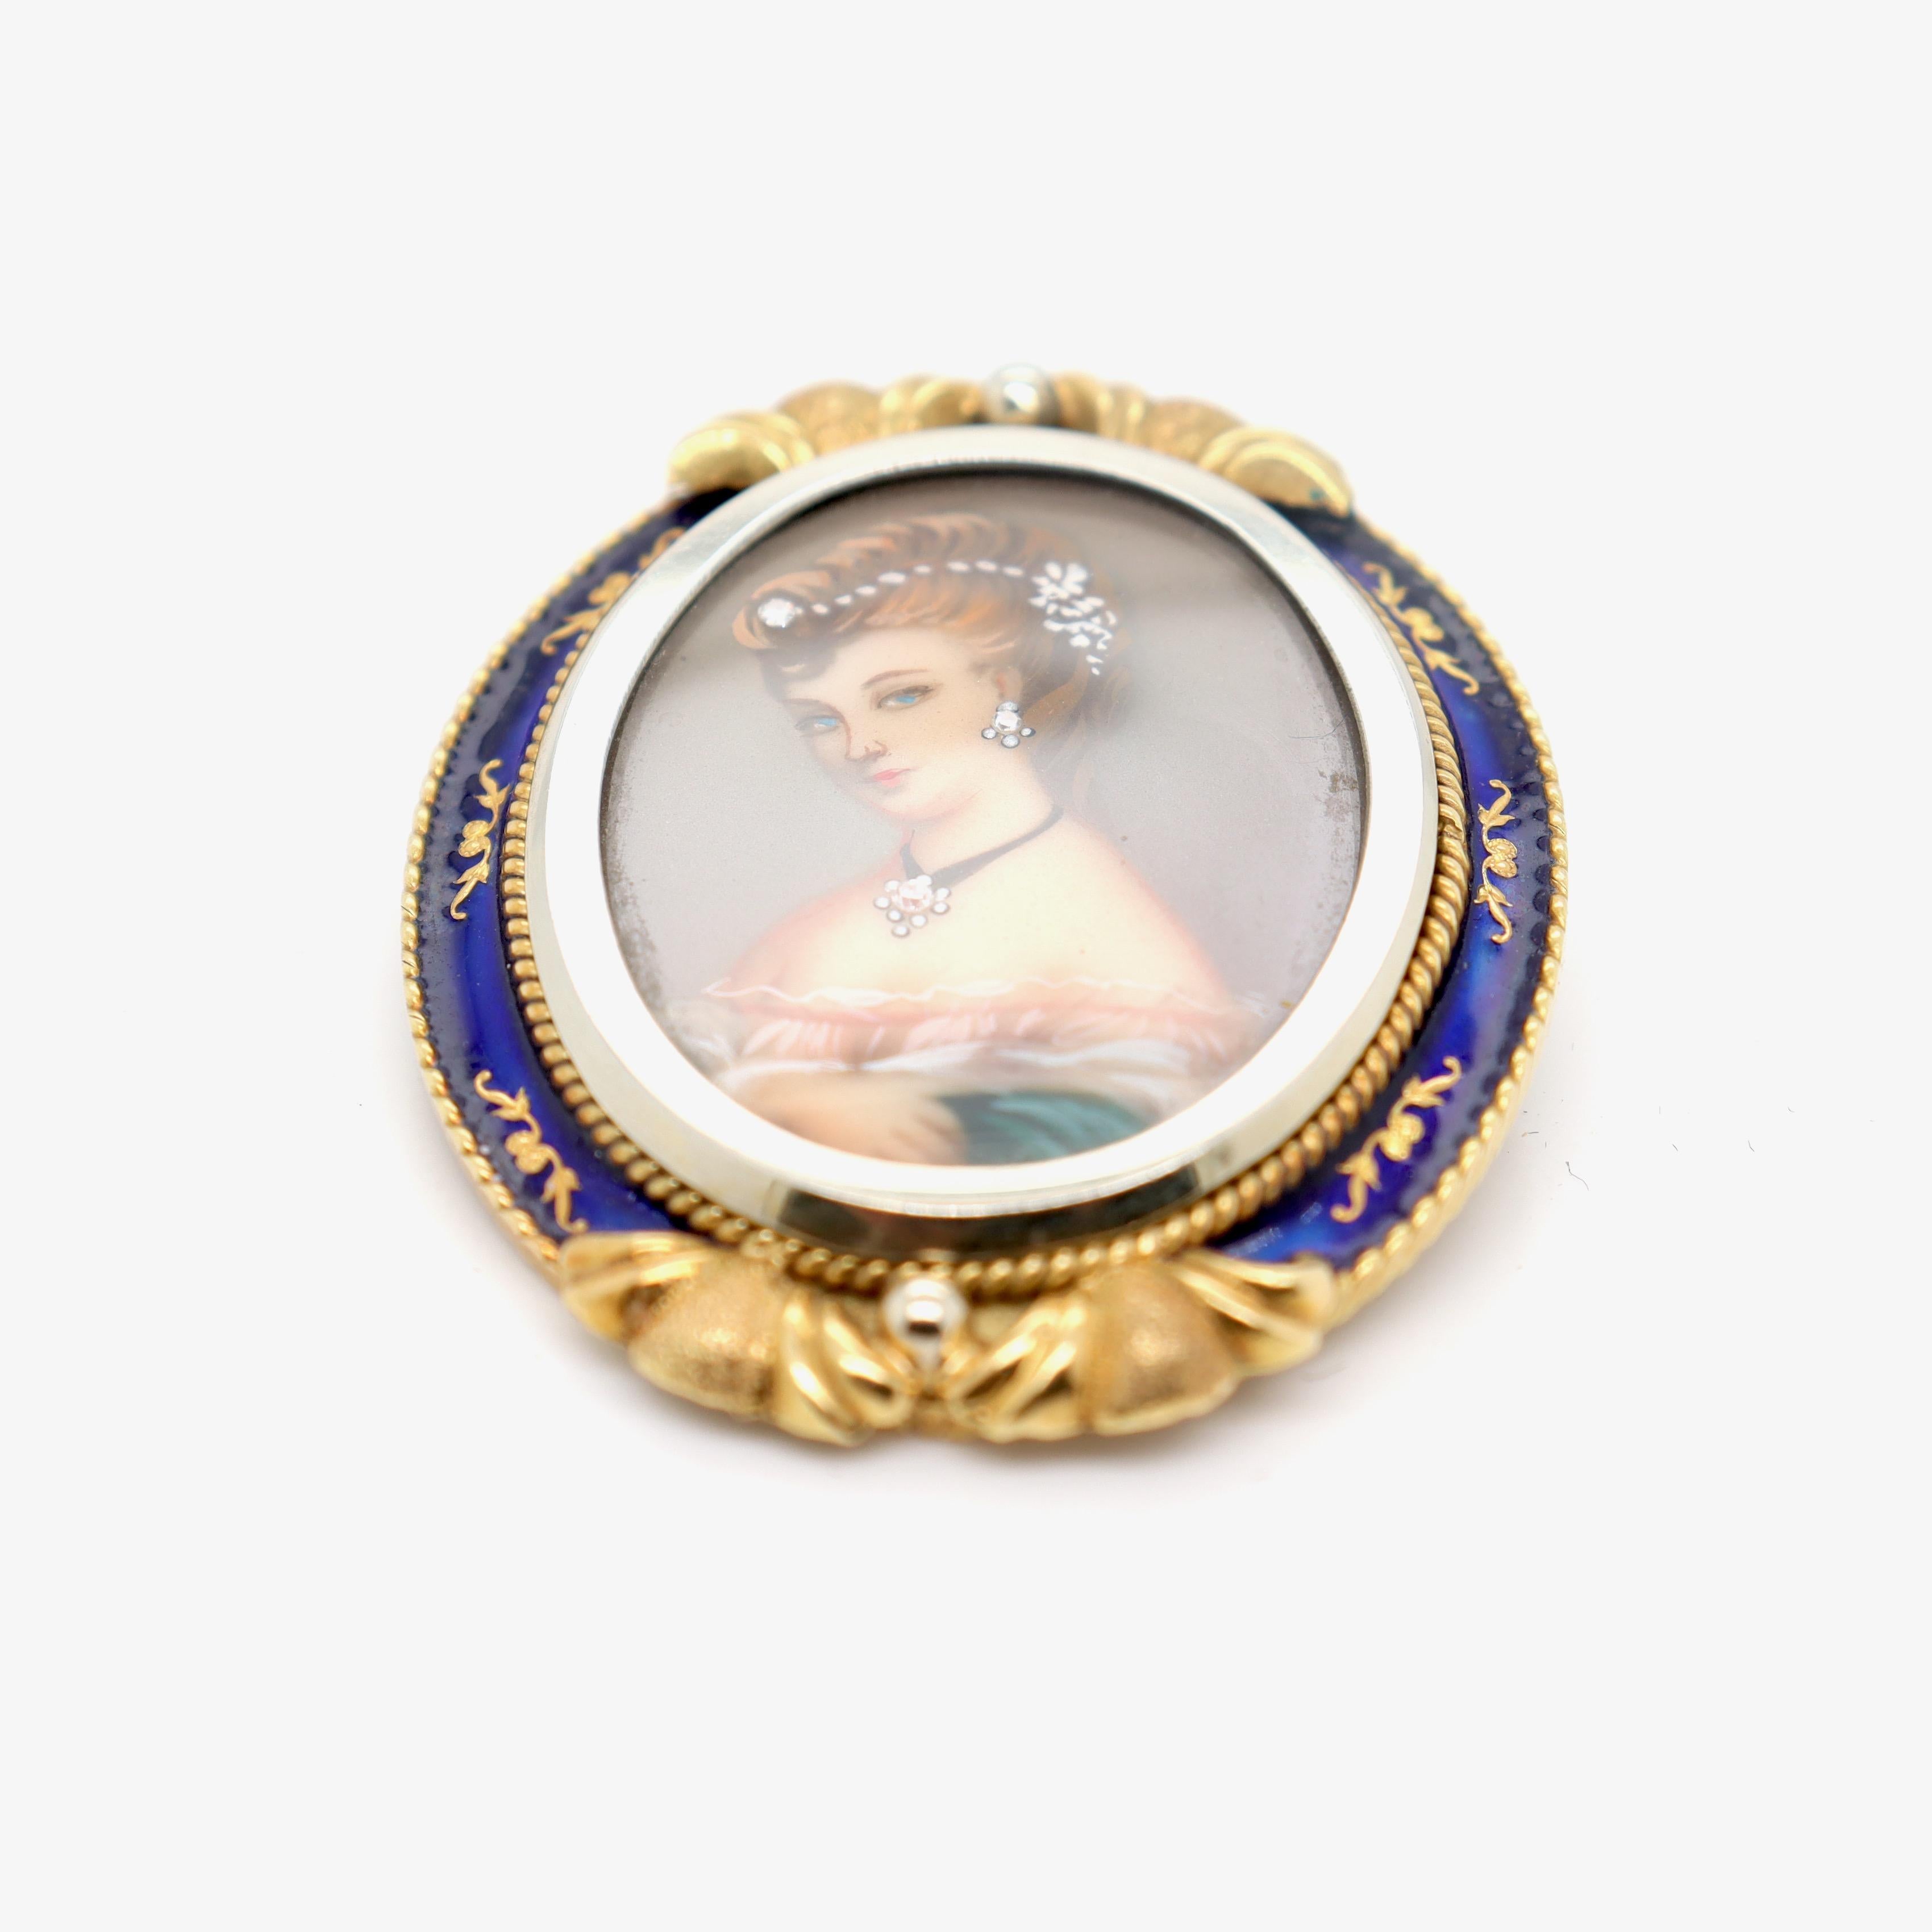 Vintage Corletto 18K Gold & Blue Enamel Portrait Miniature Brooch or Pendant In Good Condition For Sale In Philadelphia, PA